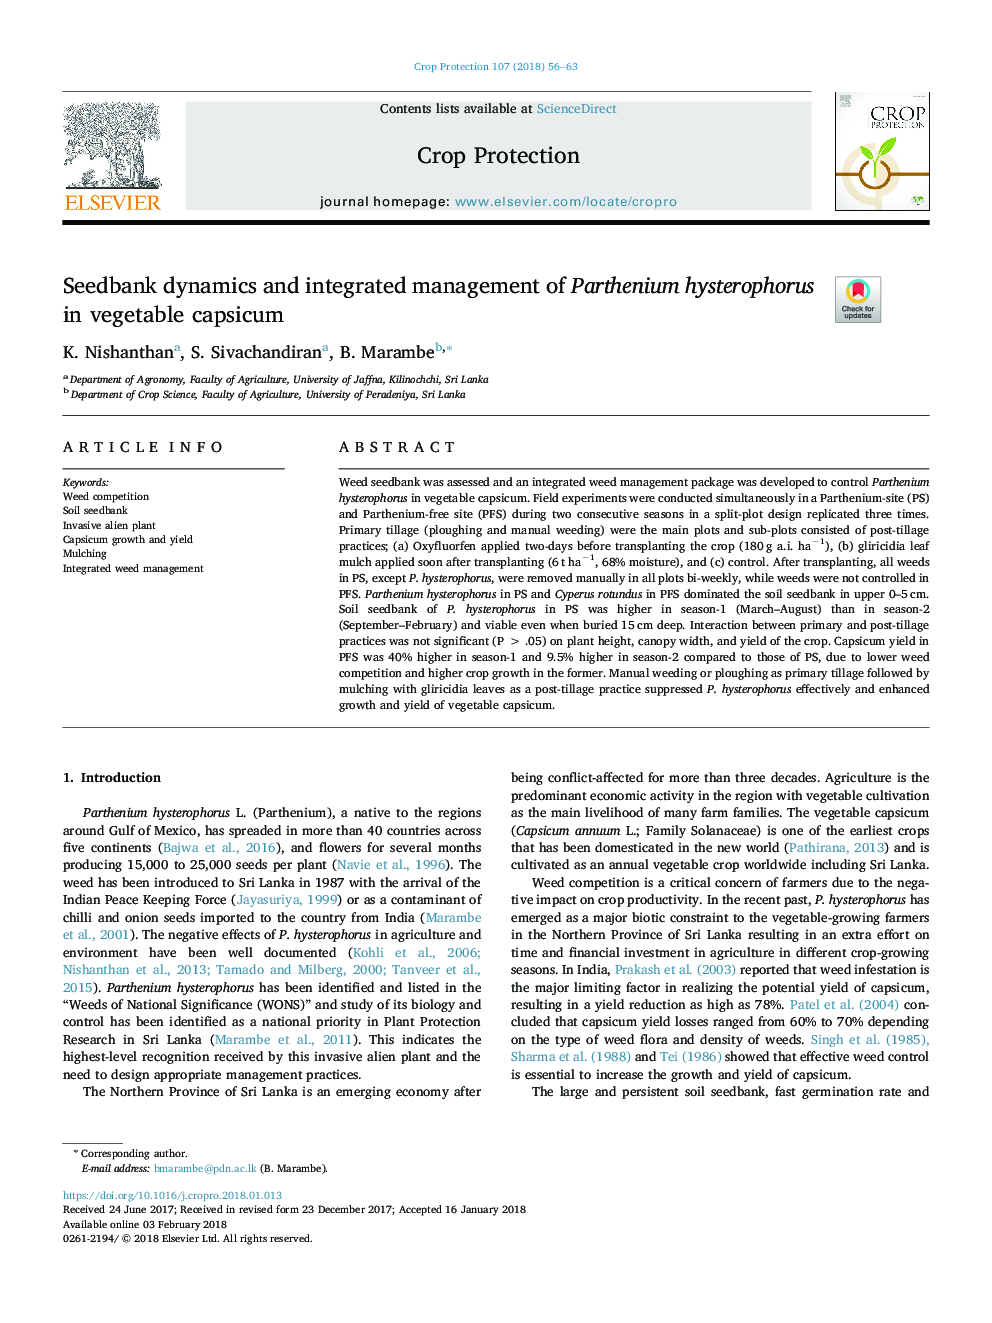 Seedbank dynamics and integrated management of Parthenium hysterophorus in vegetable capsicum